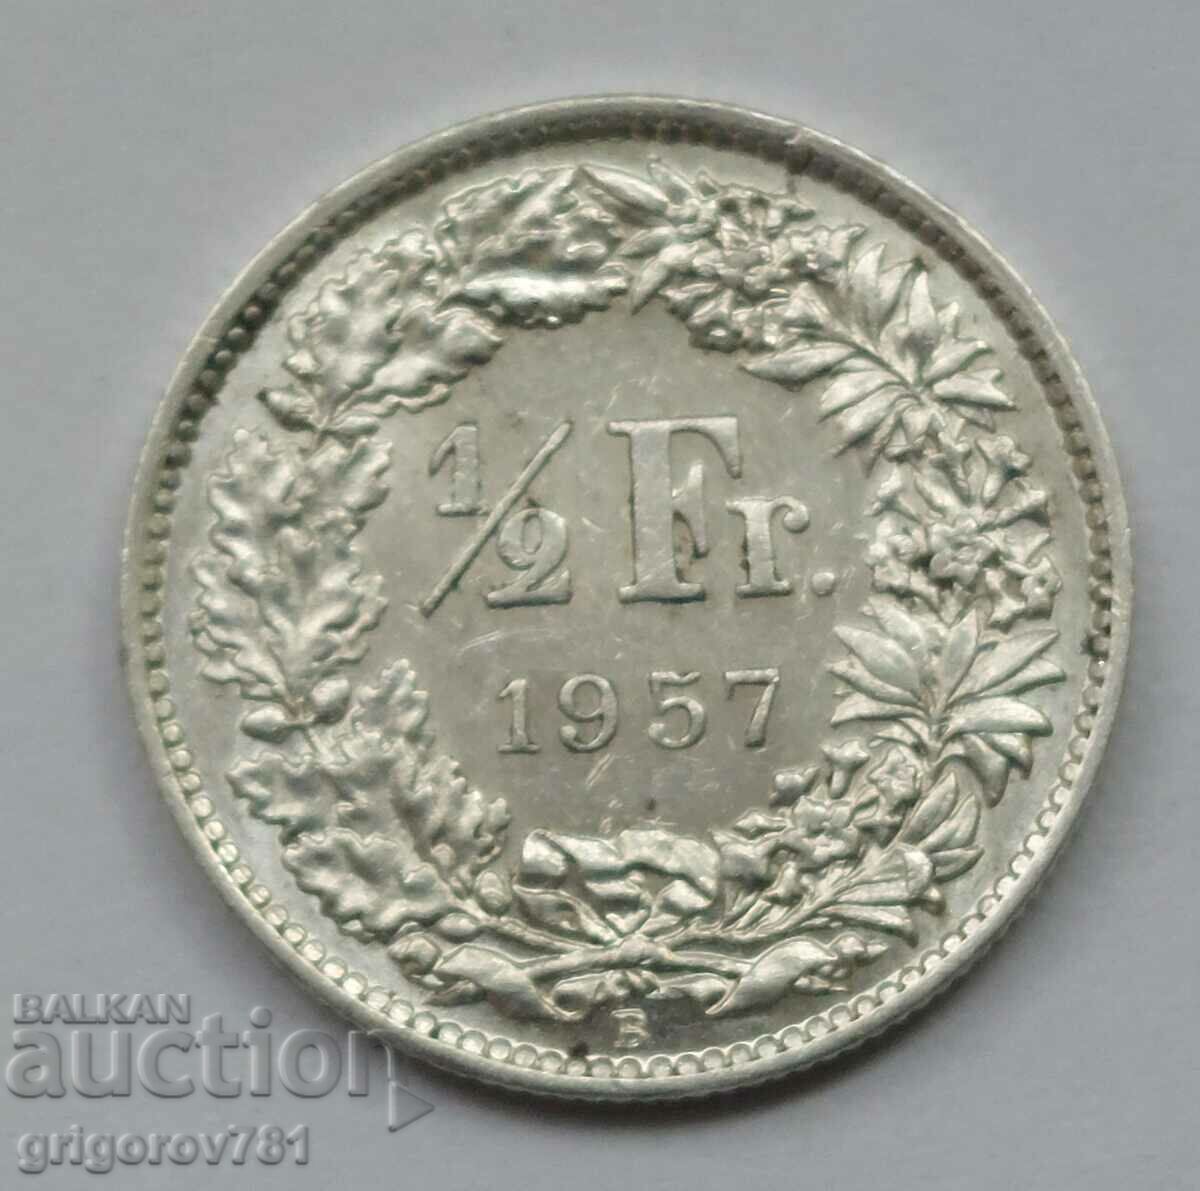 1/2 Franc Silver Switzerland 1957 B - Silver Coin #128